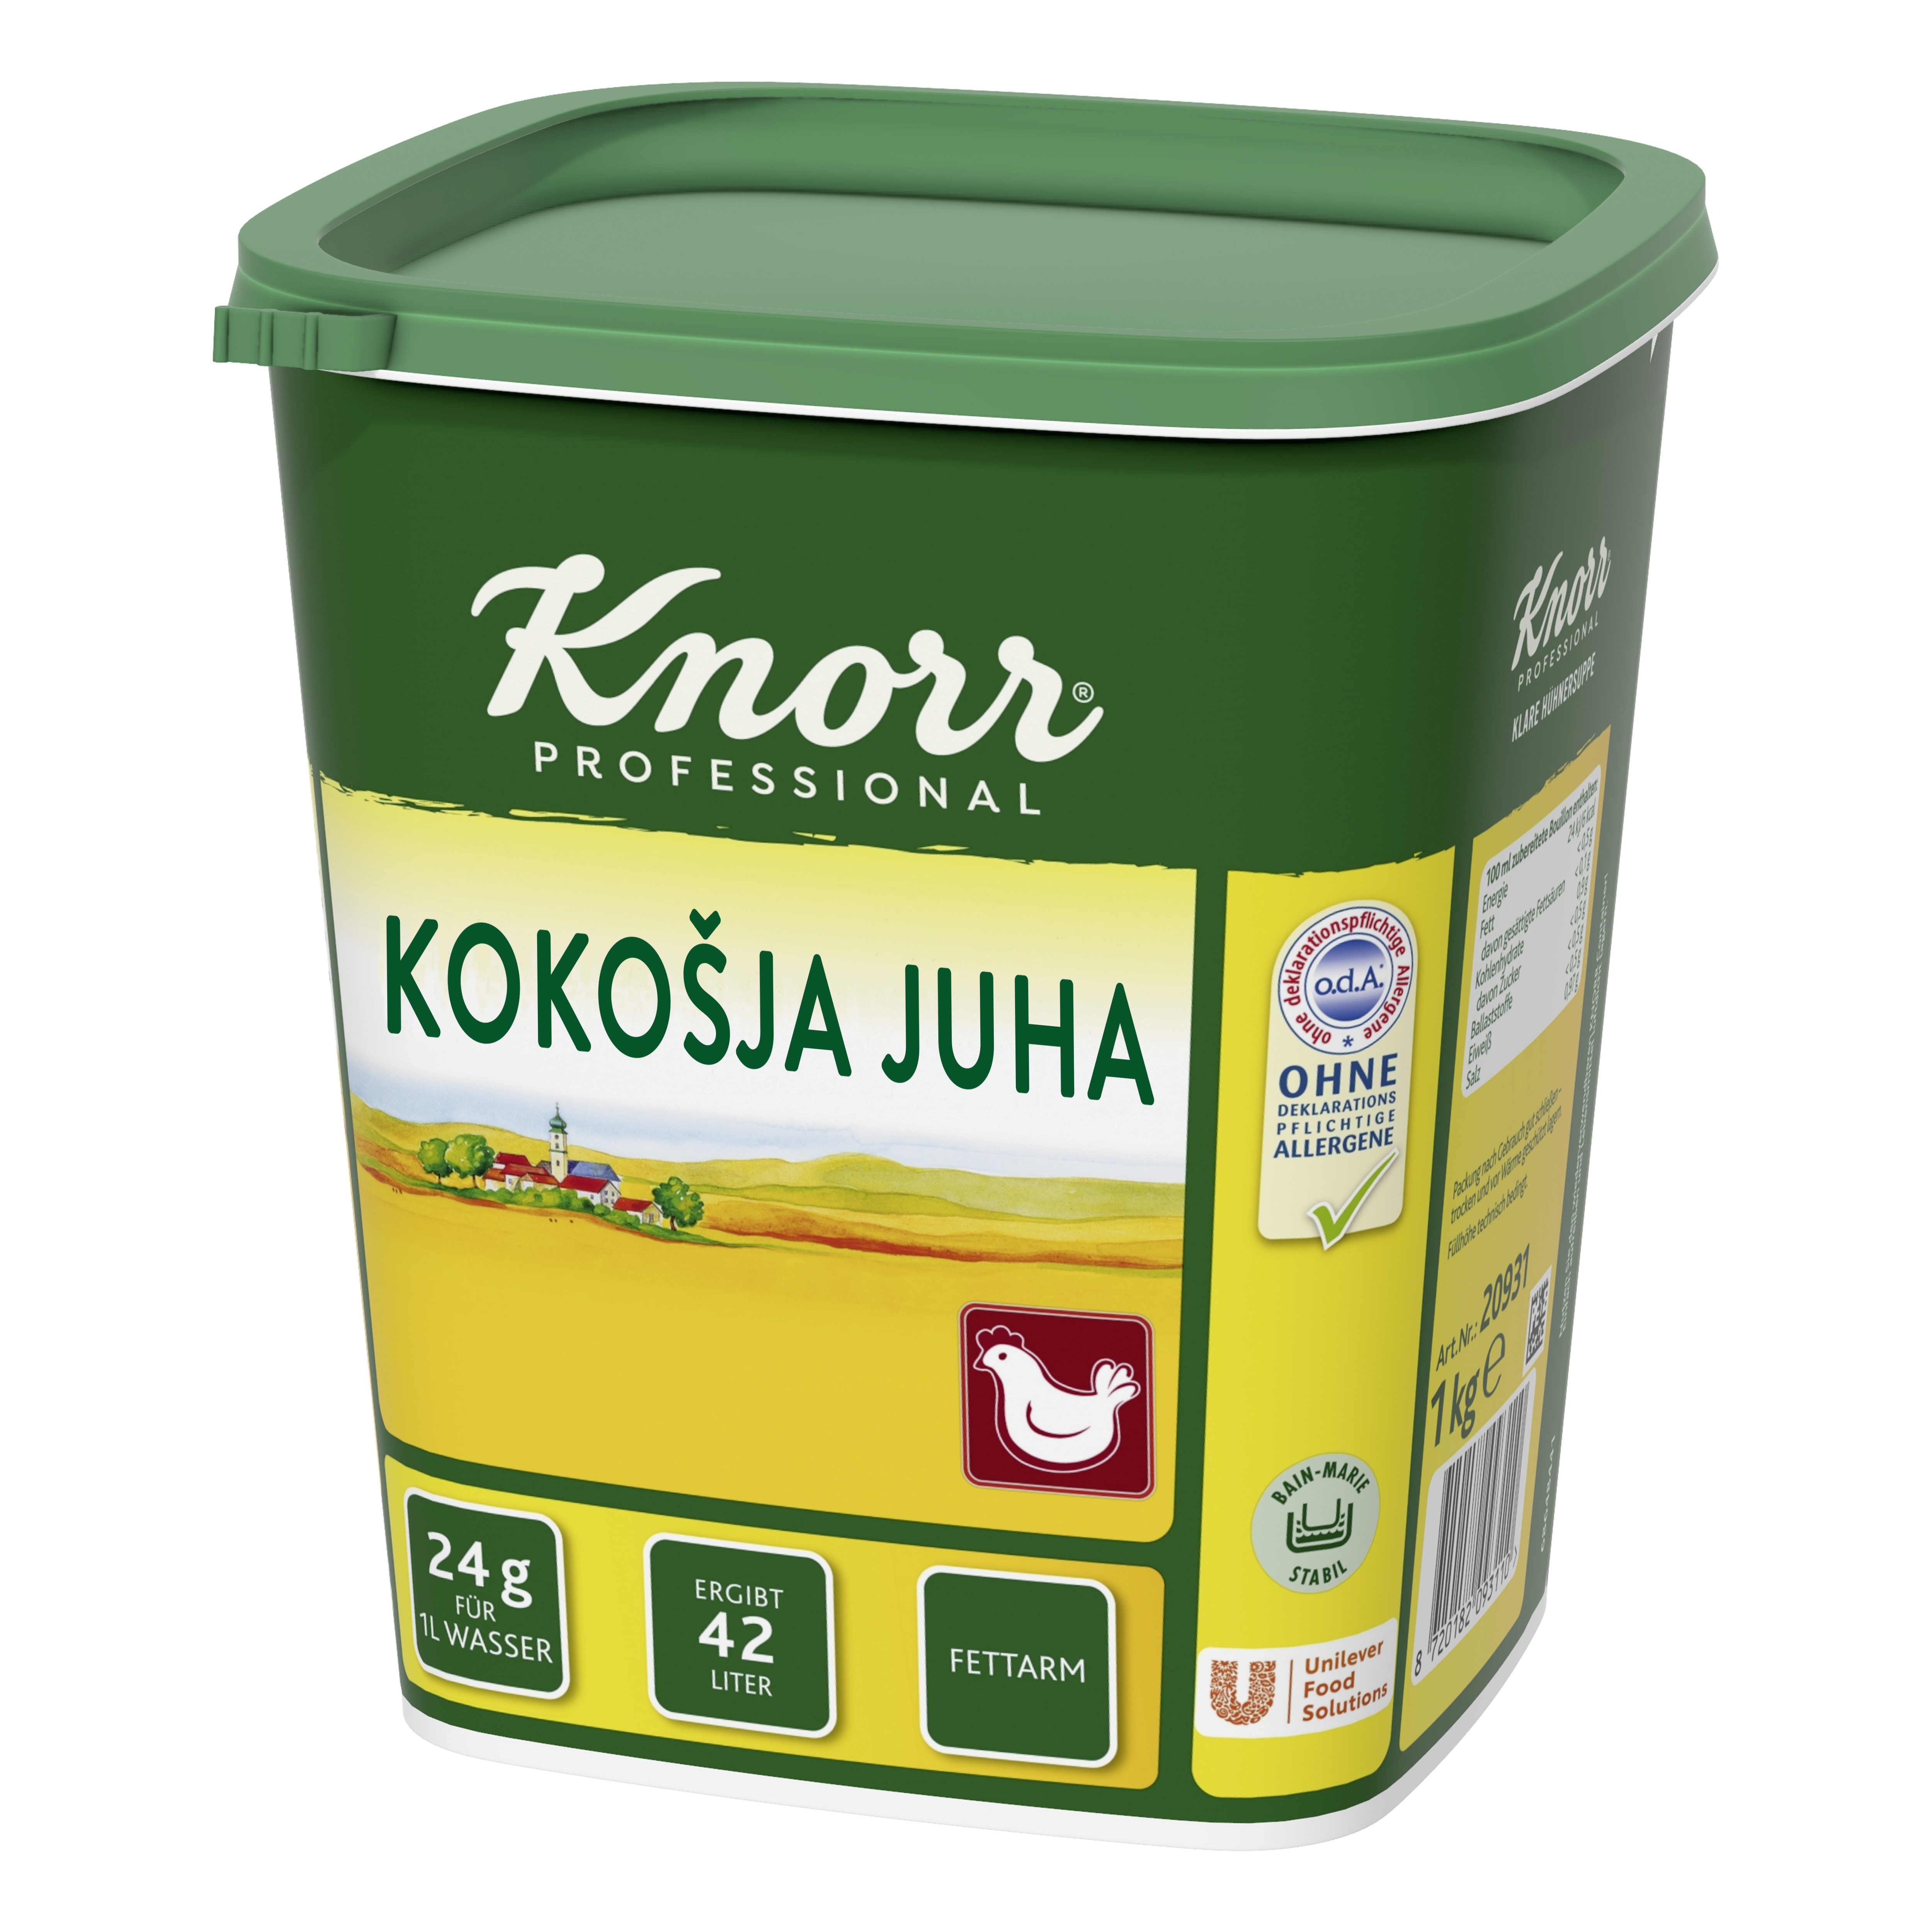 Knorr Kokošja juha 1 kg